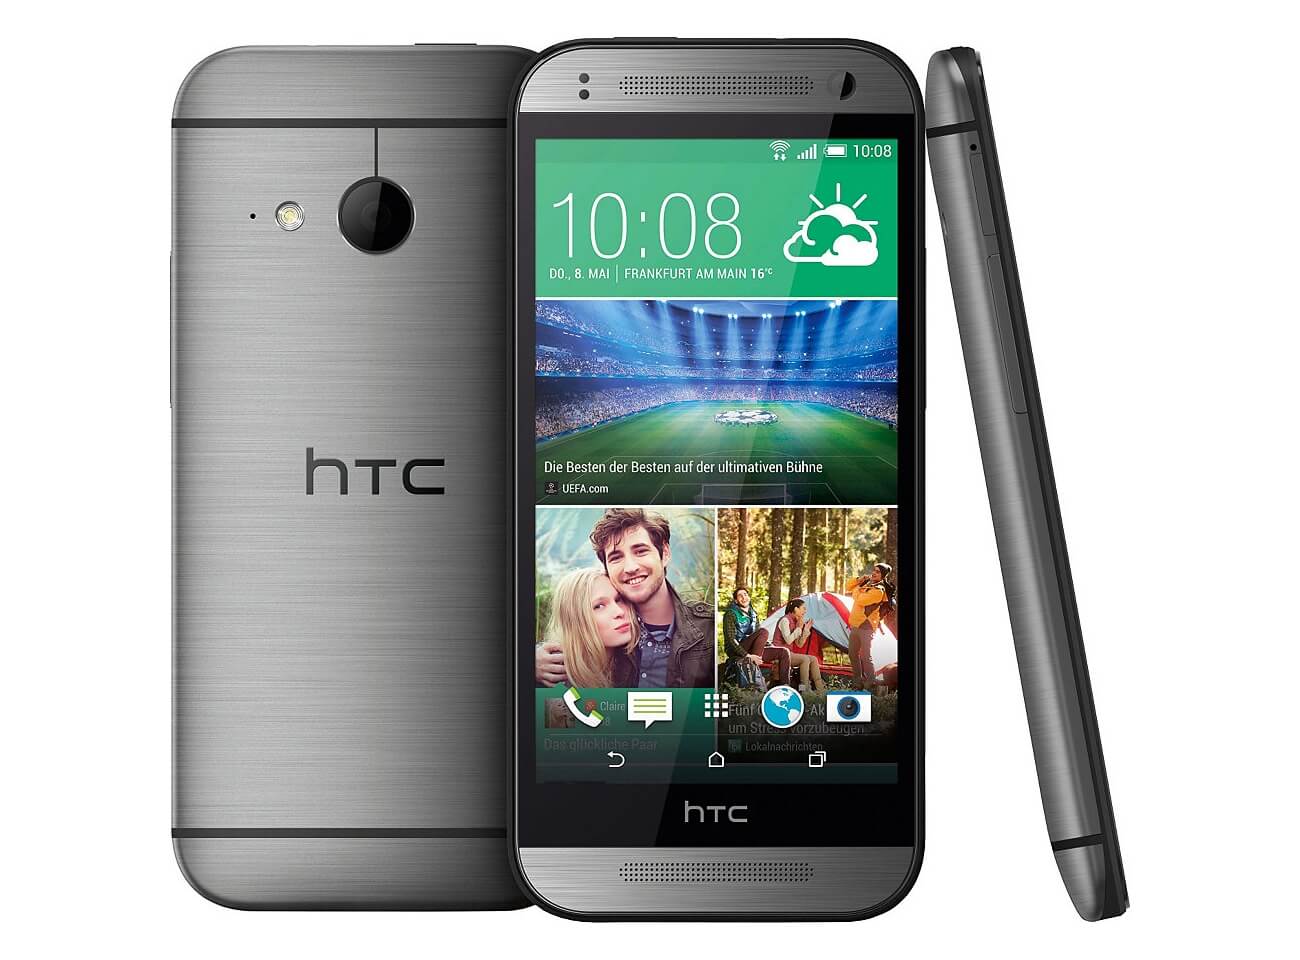 HTC One mini 2 не получит Android 5.0 Lollipop